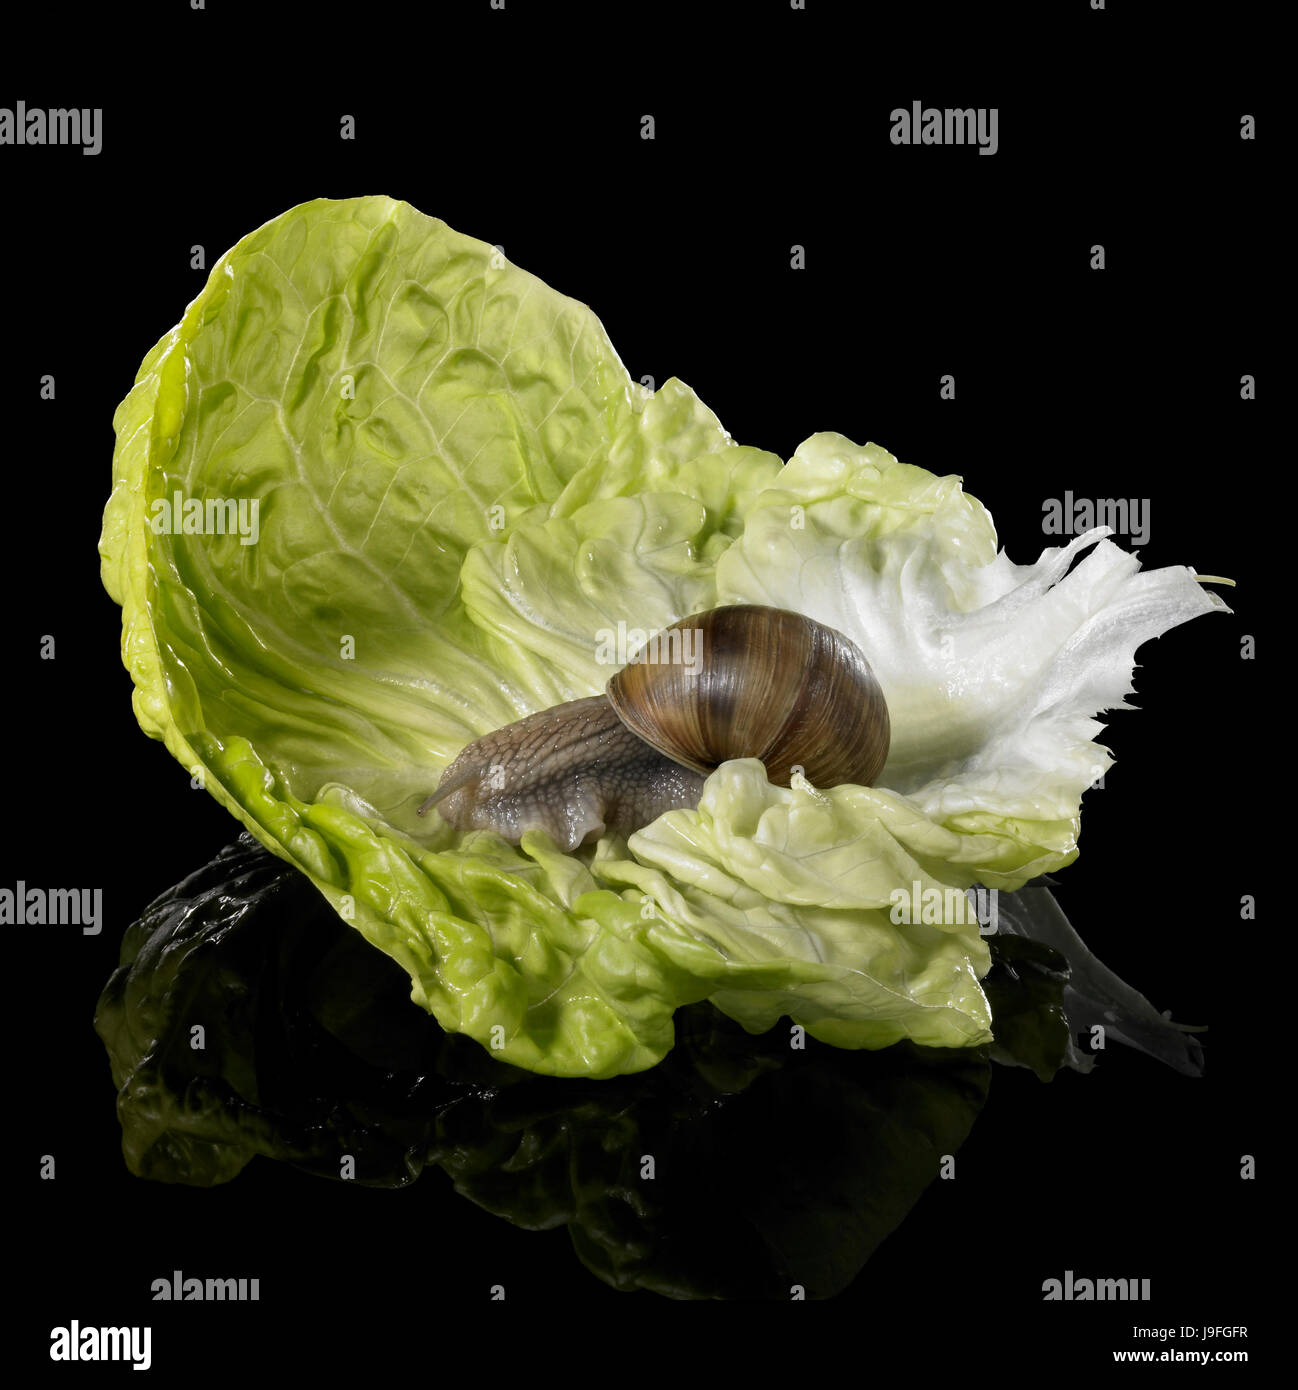 grapevine snail on green lettuce leaf Stock Photo